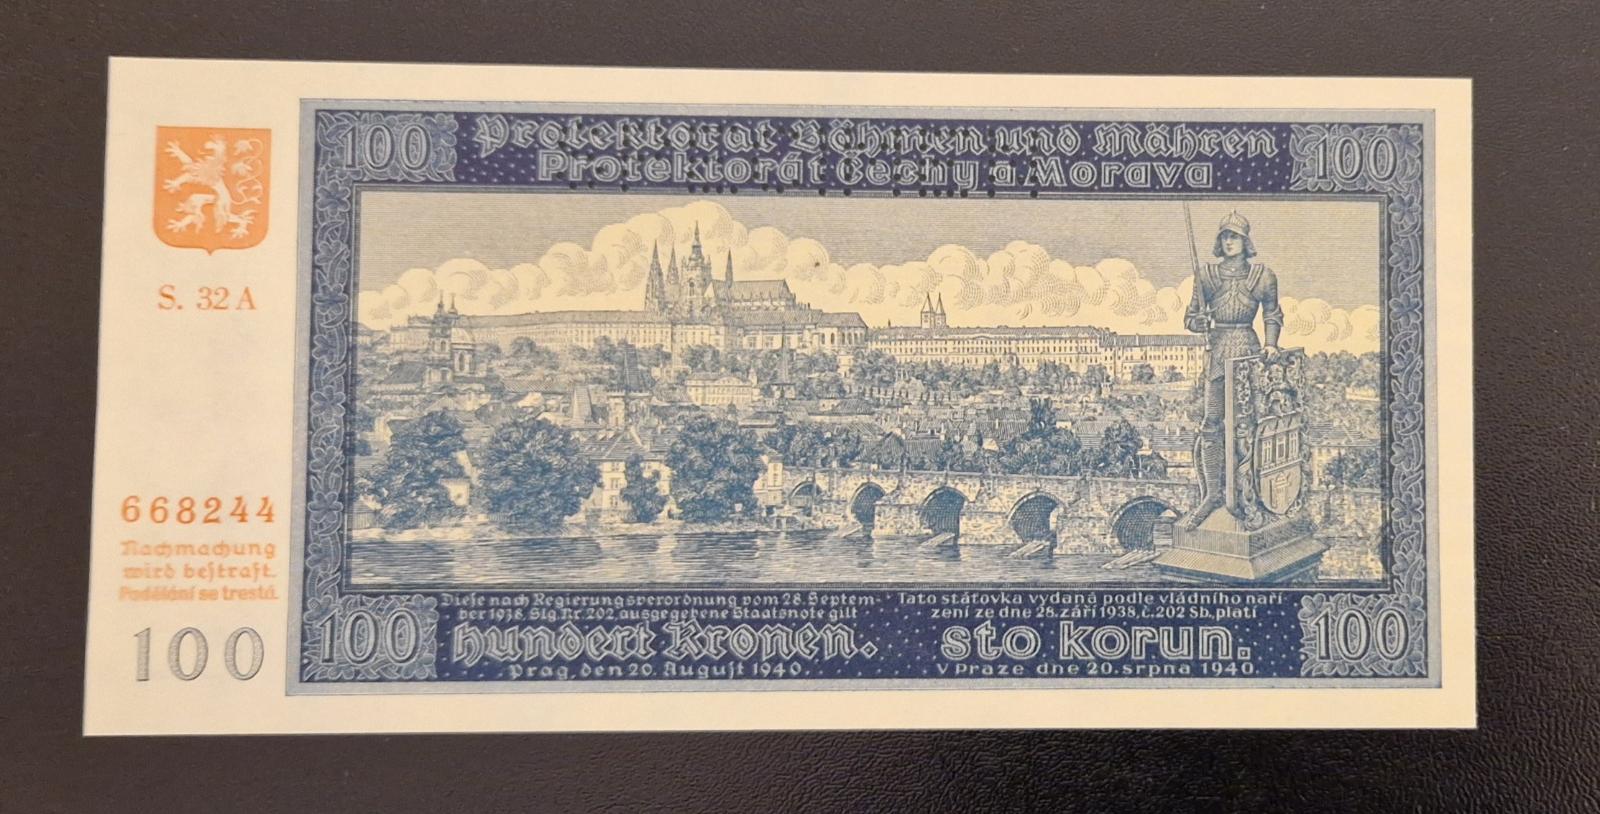 100 korún 1940 séria A perf . UNC - Bankovky